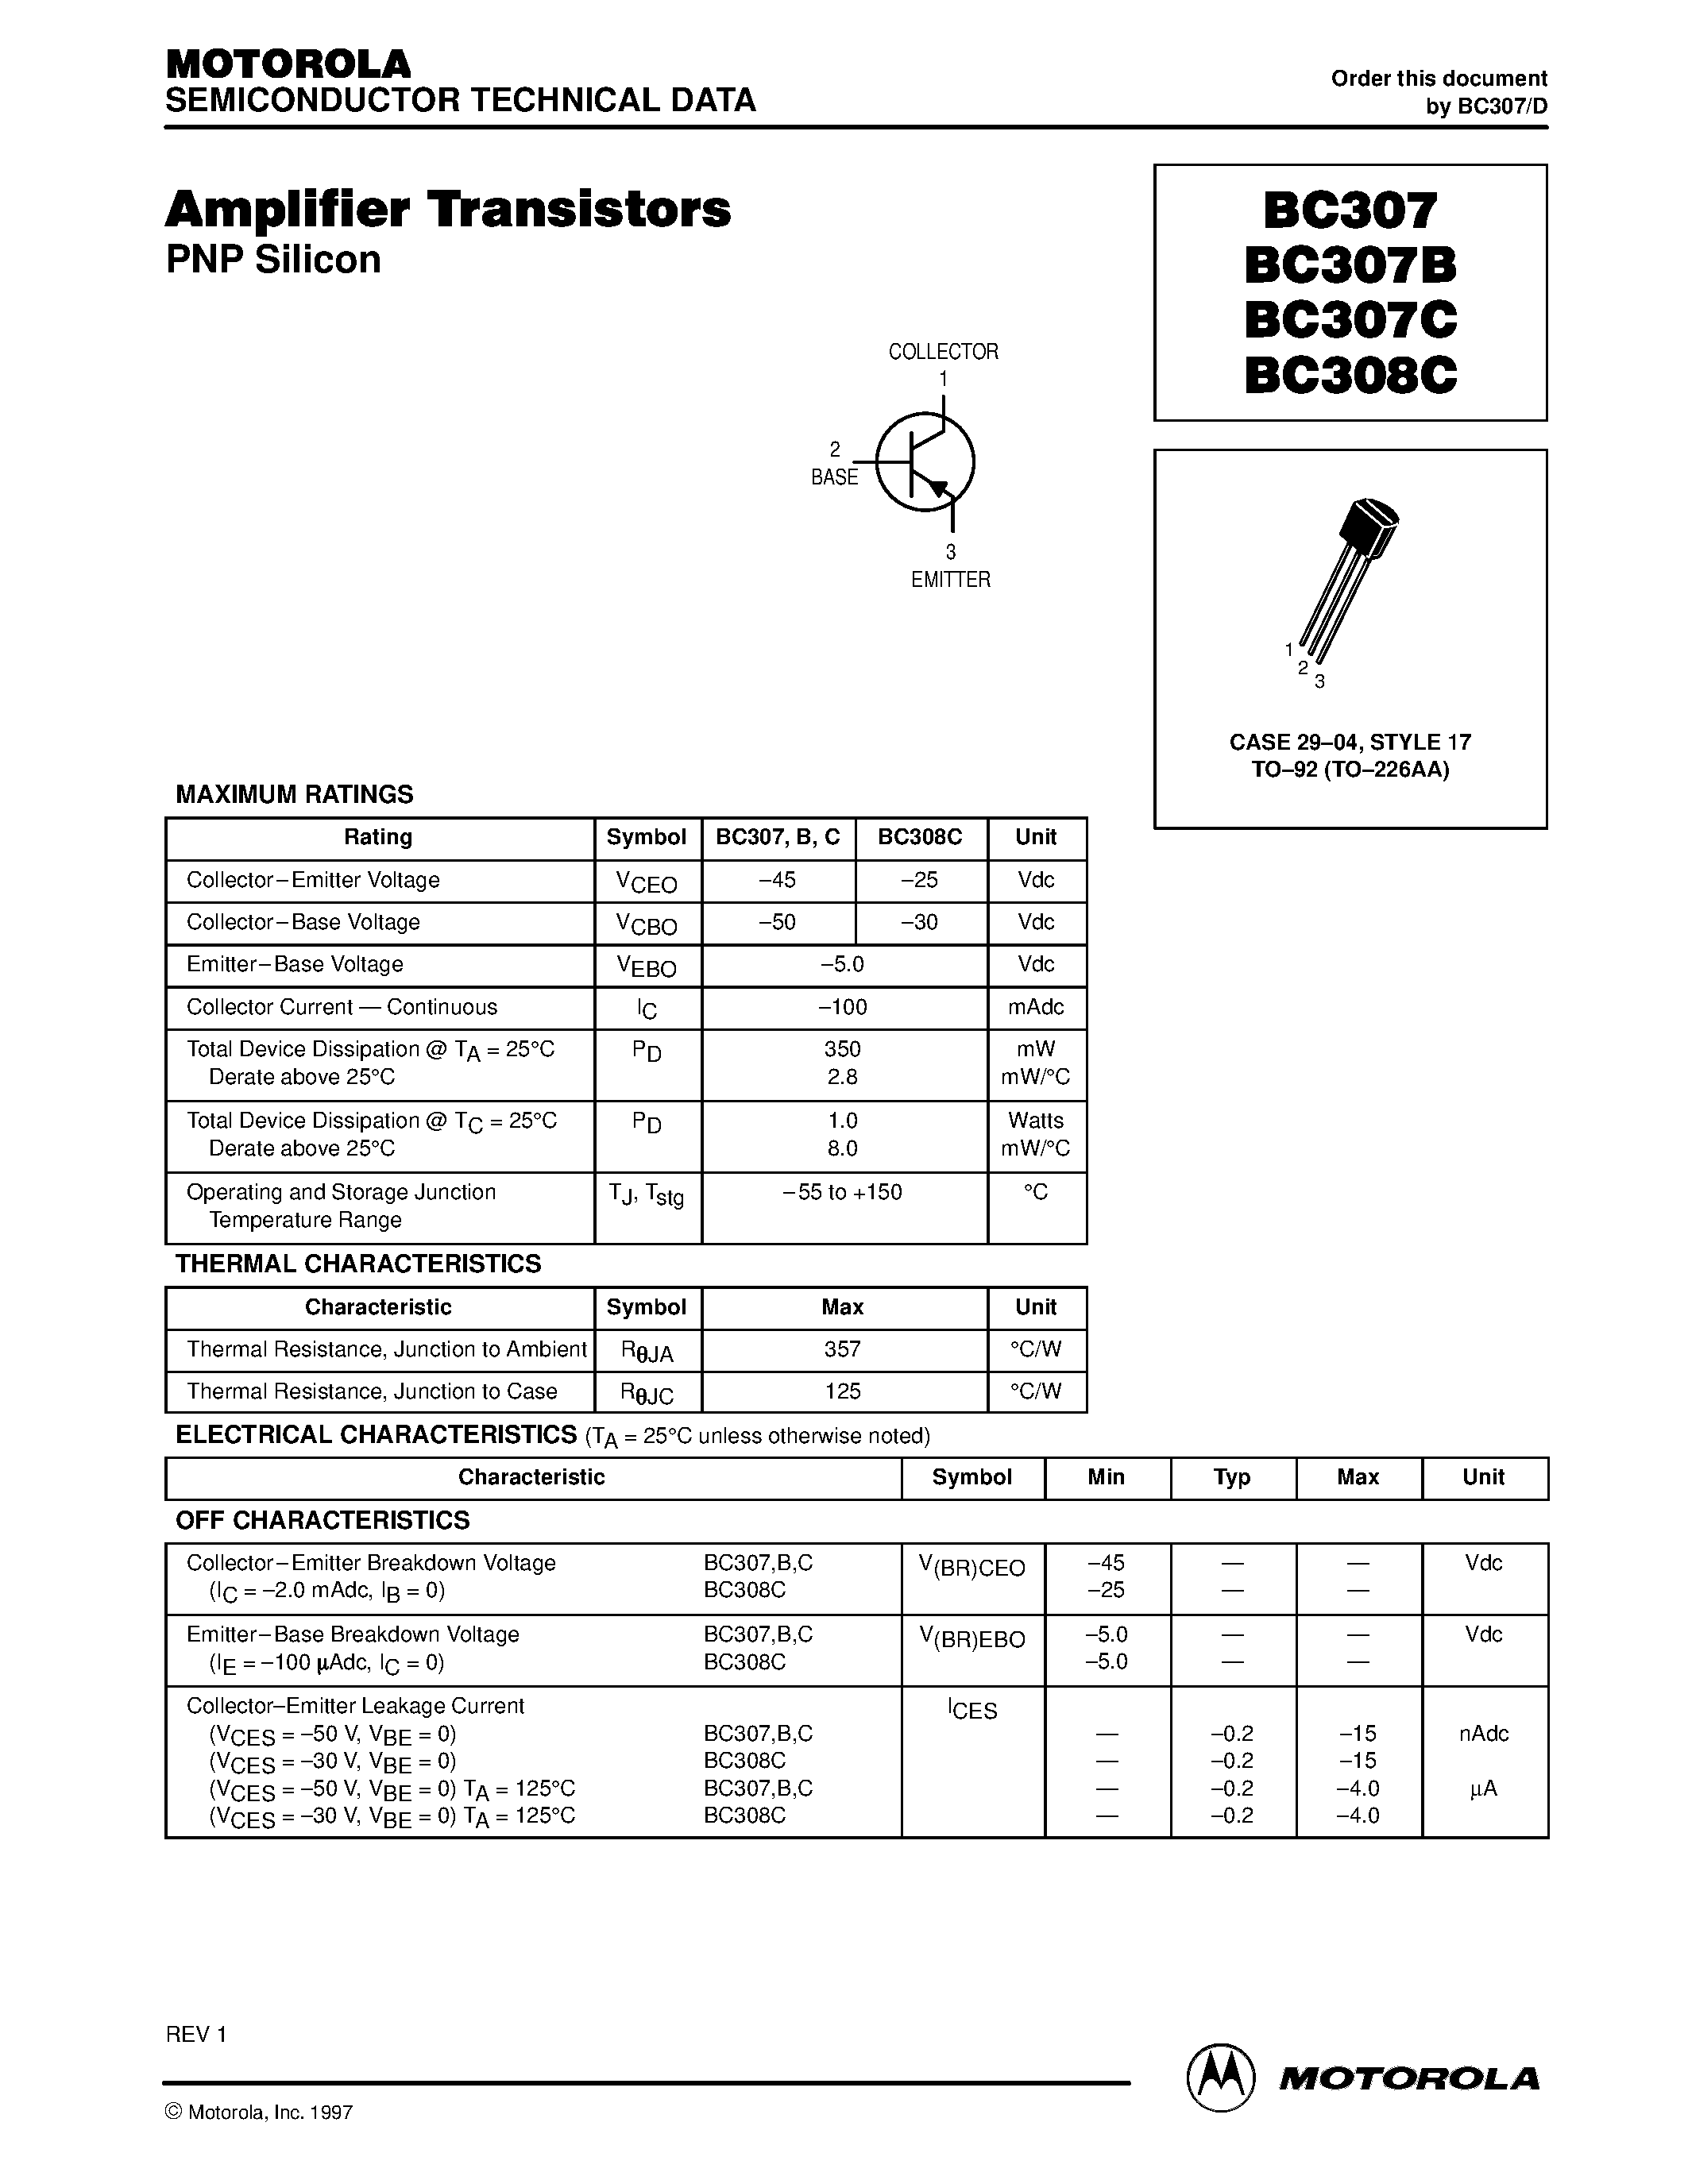 Datasheet BC307 - Amplifier Transistors(PNP Silicon) page 1